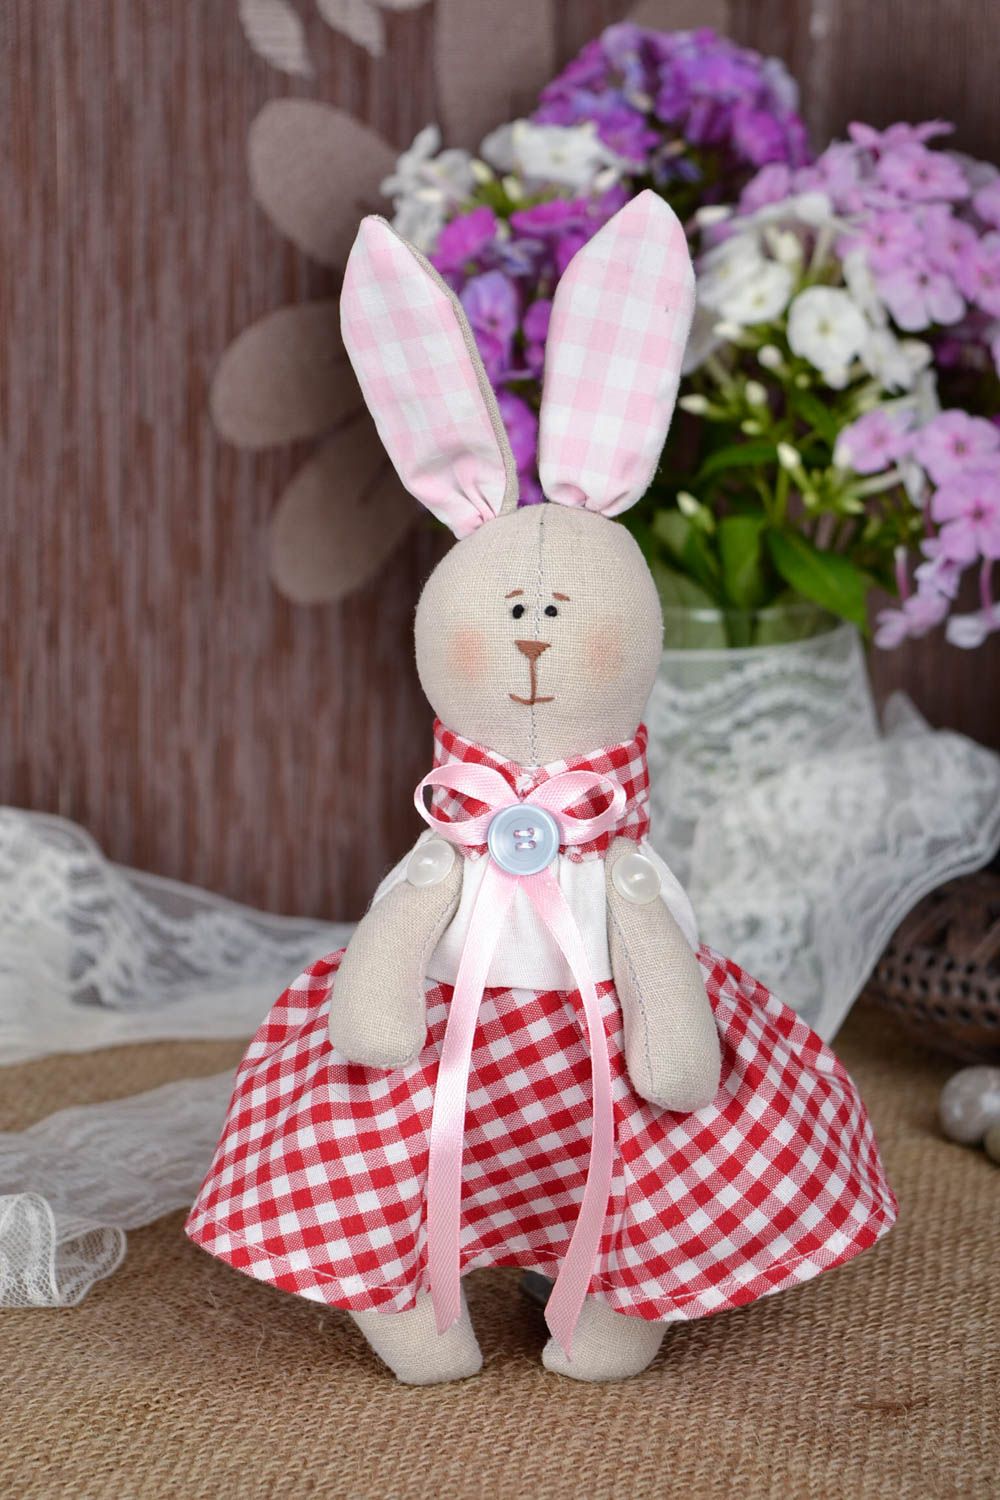 Stuffed toy rabbit toy homemade crafts handmade toys nursery decor kids gifts photo 1